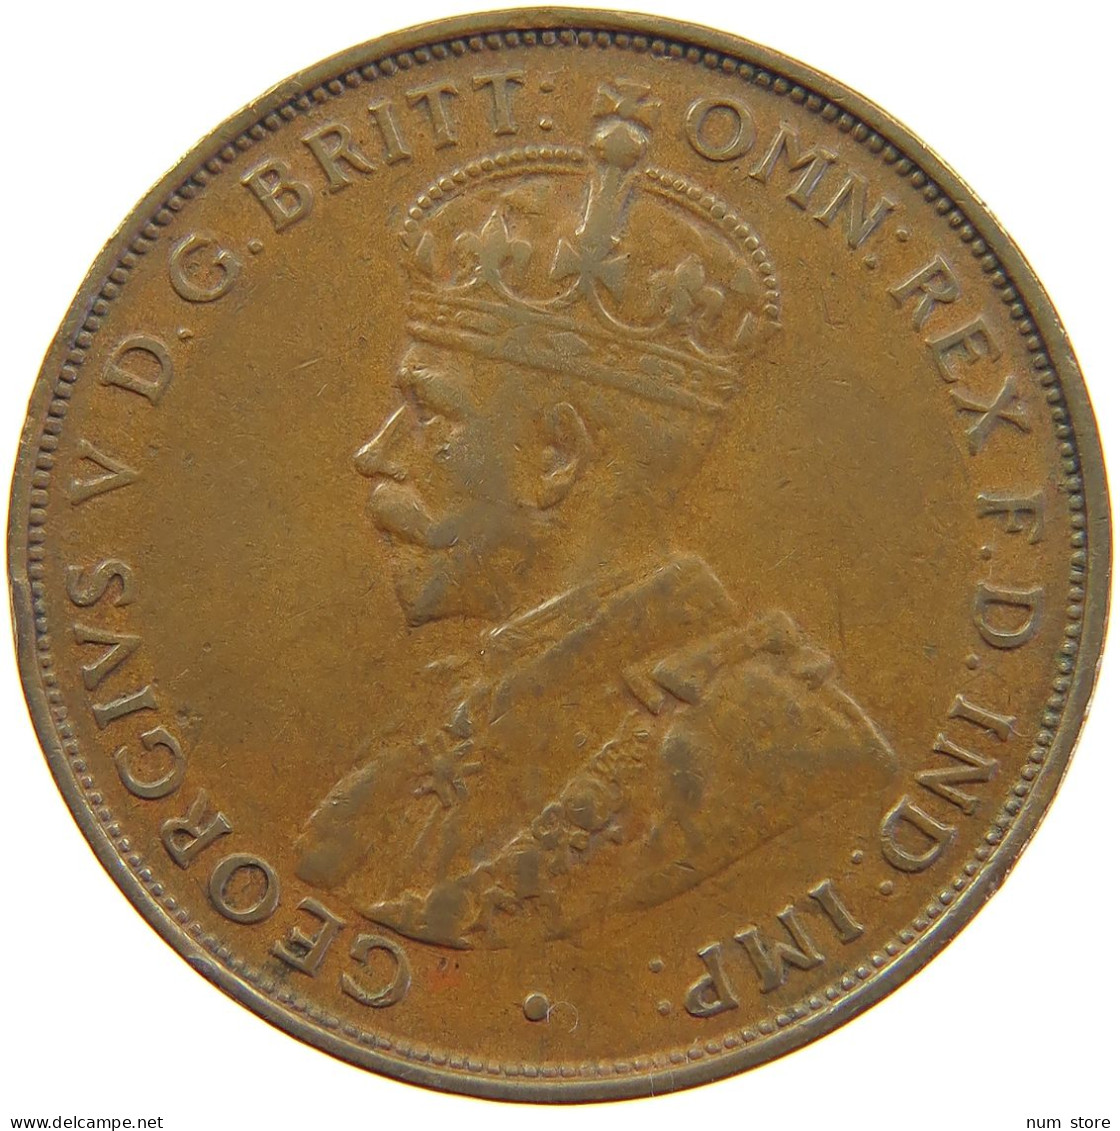 AUSTRALIA PENNY 1935 GEORGE V. (1910-1936) #MA 065183 - Penny